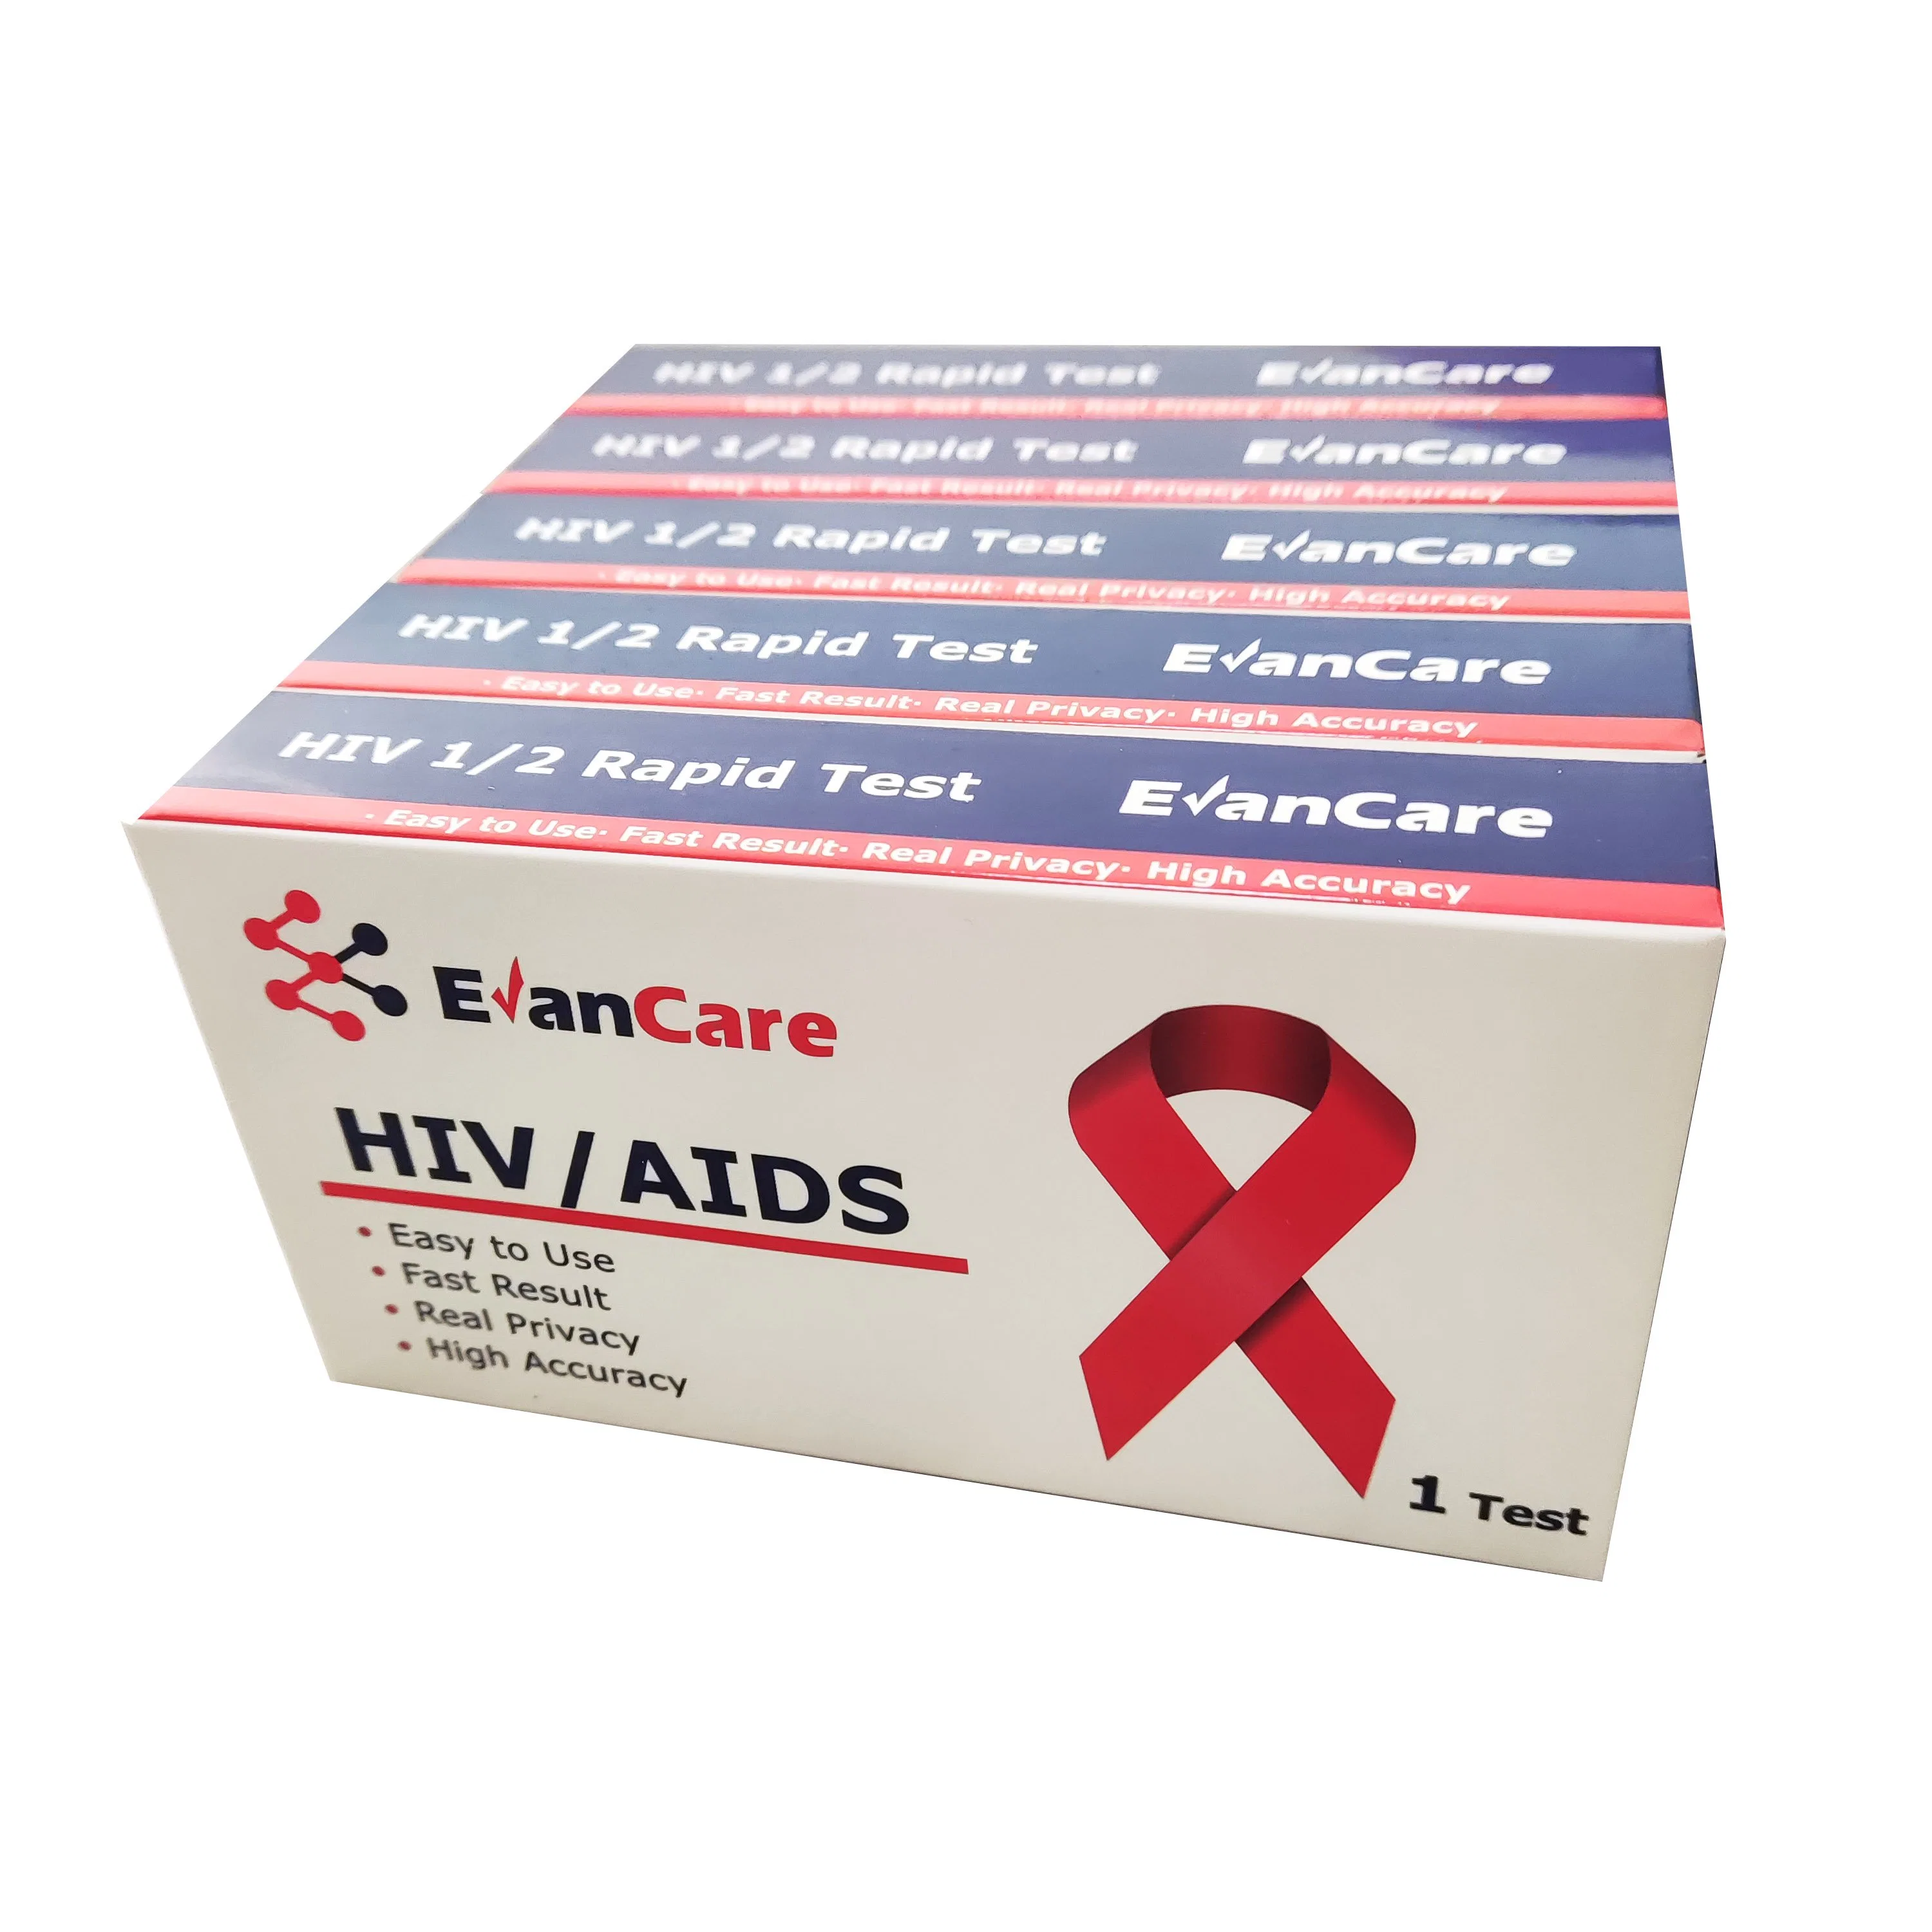 HIV HCG LH typoid малария денге HCV HBV HBsAg сифилиз TP H. Pylori HP Antigen Antibodytoxo Chlamydia Fob PSA Rapid Urine Analysis Doa Alcohol Self Test Kit